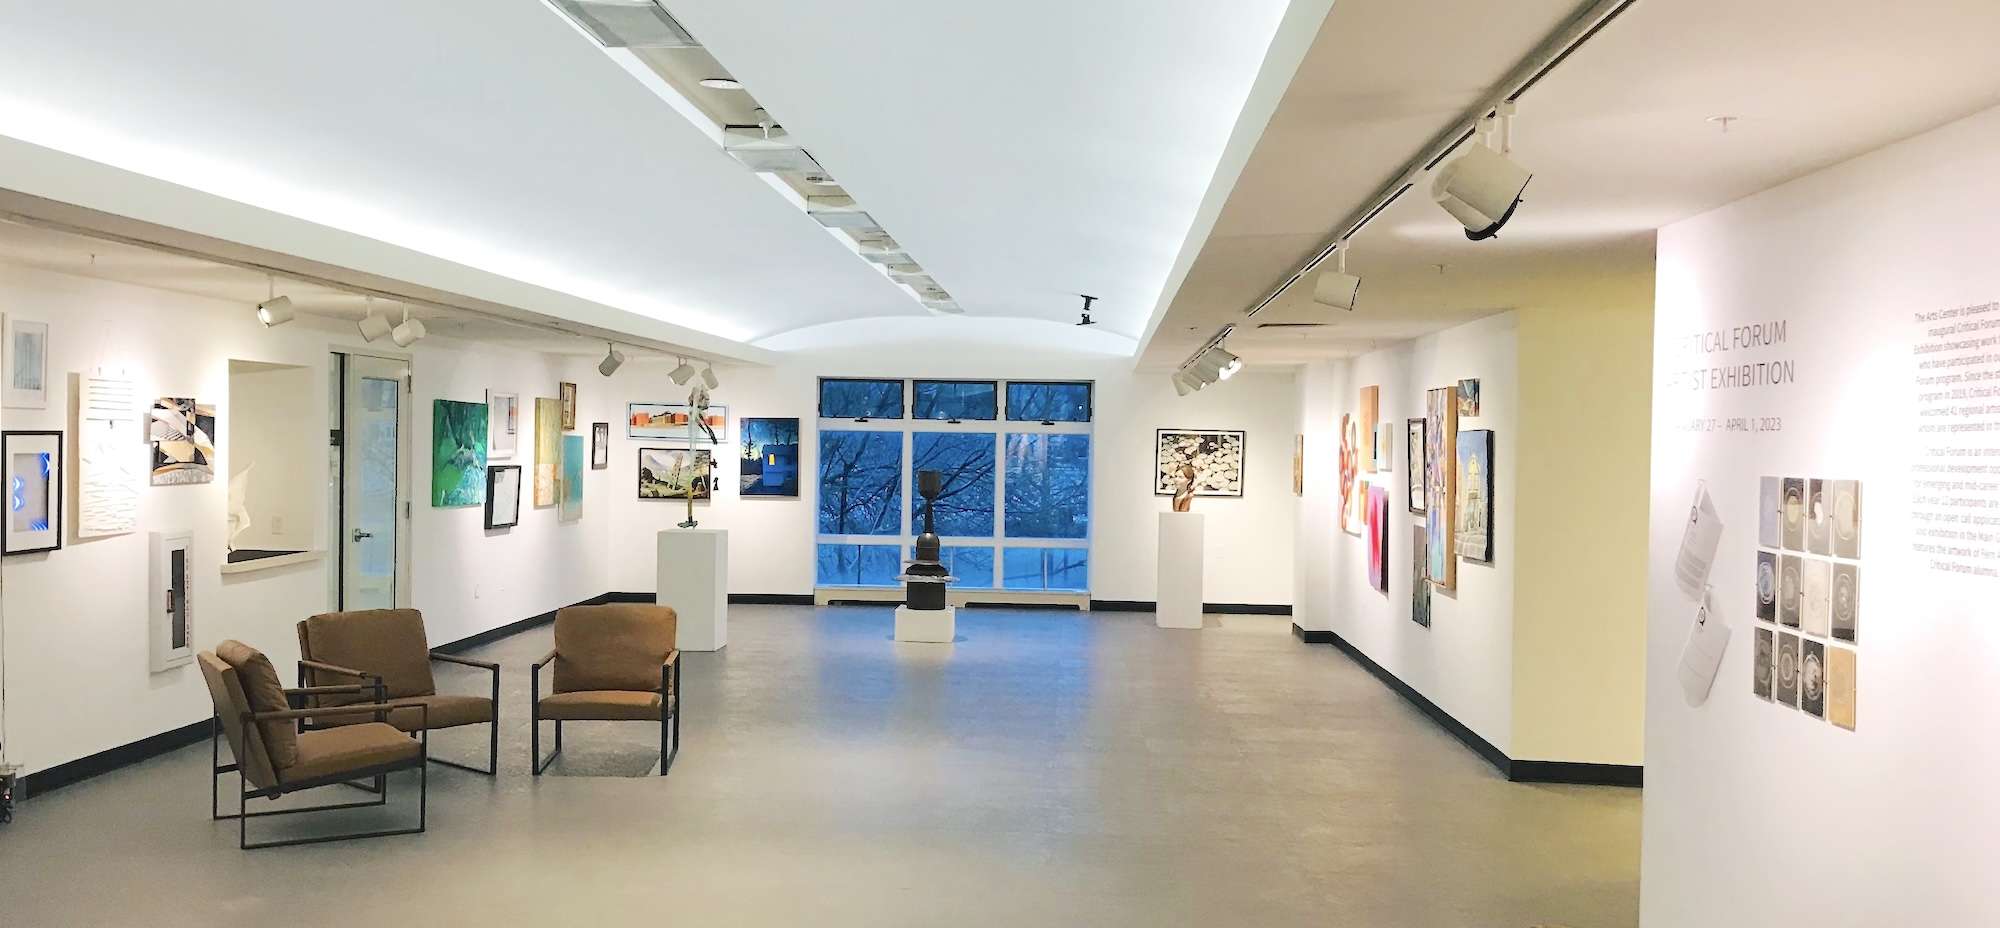 facility rentals foyer gallery lobby